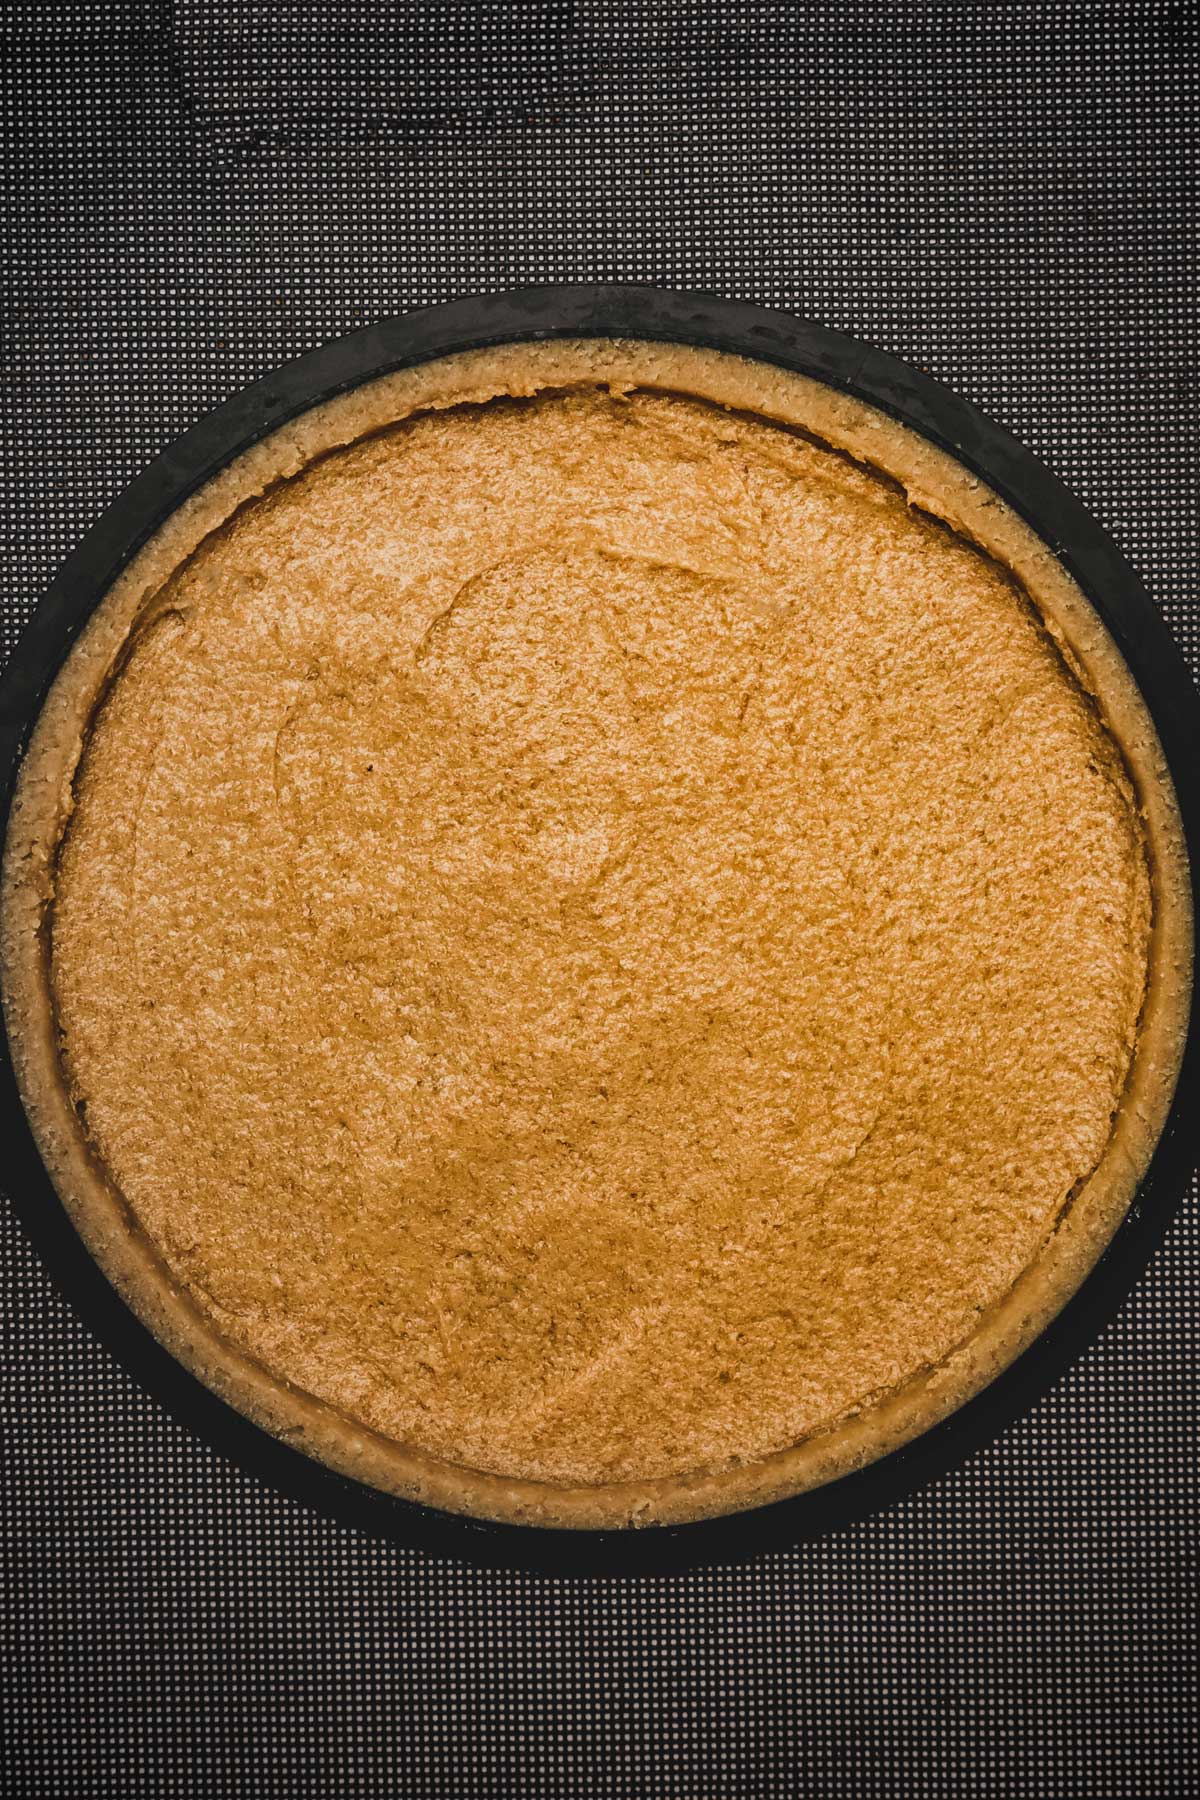 tart pan filled with a tart dough and almond cream